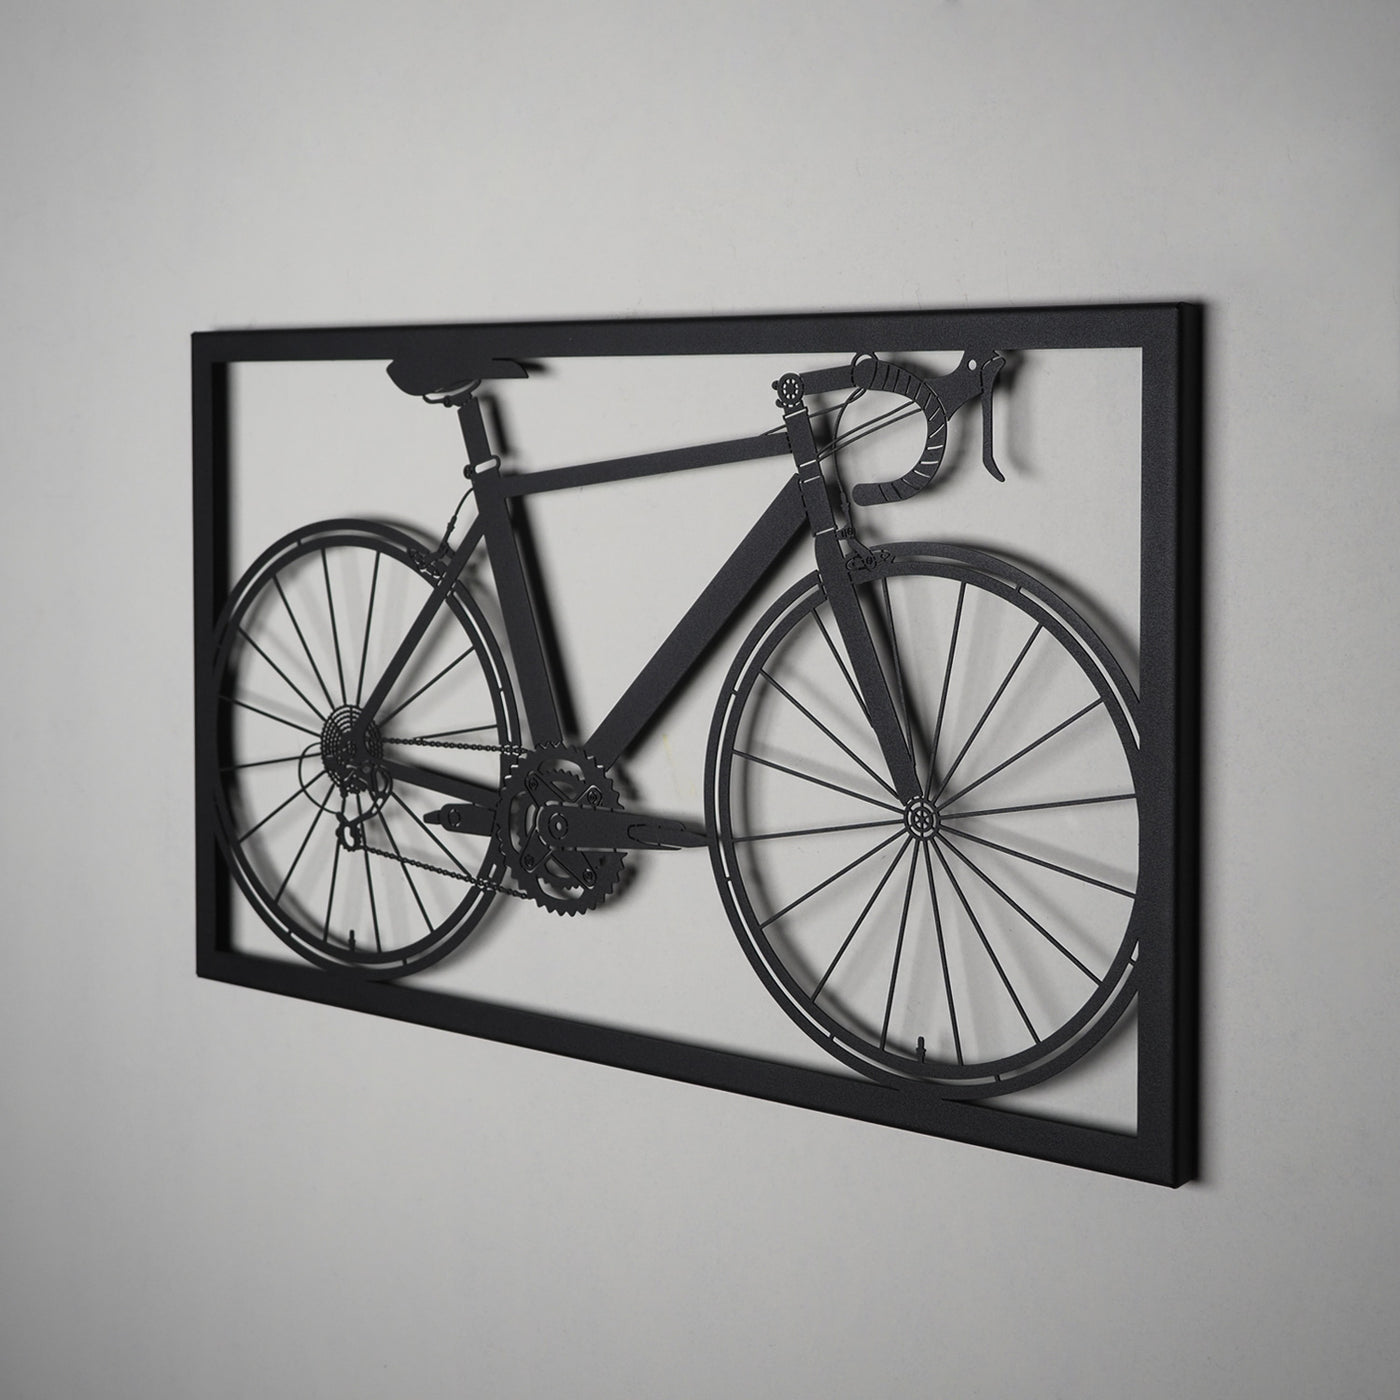 Bicycle, Modern Design, Wall Decoration, Metal Art, Gift, Adventure, Fun